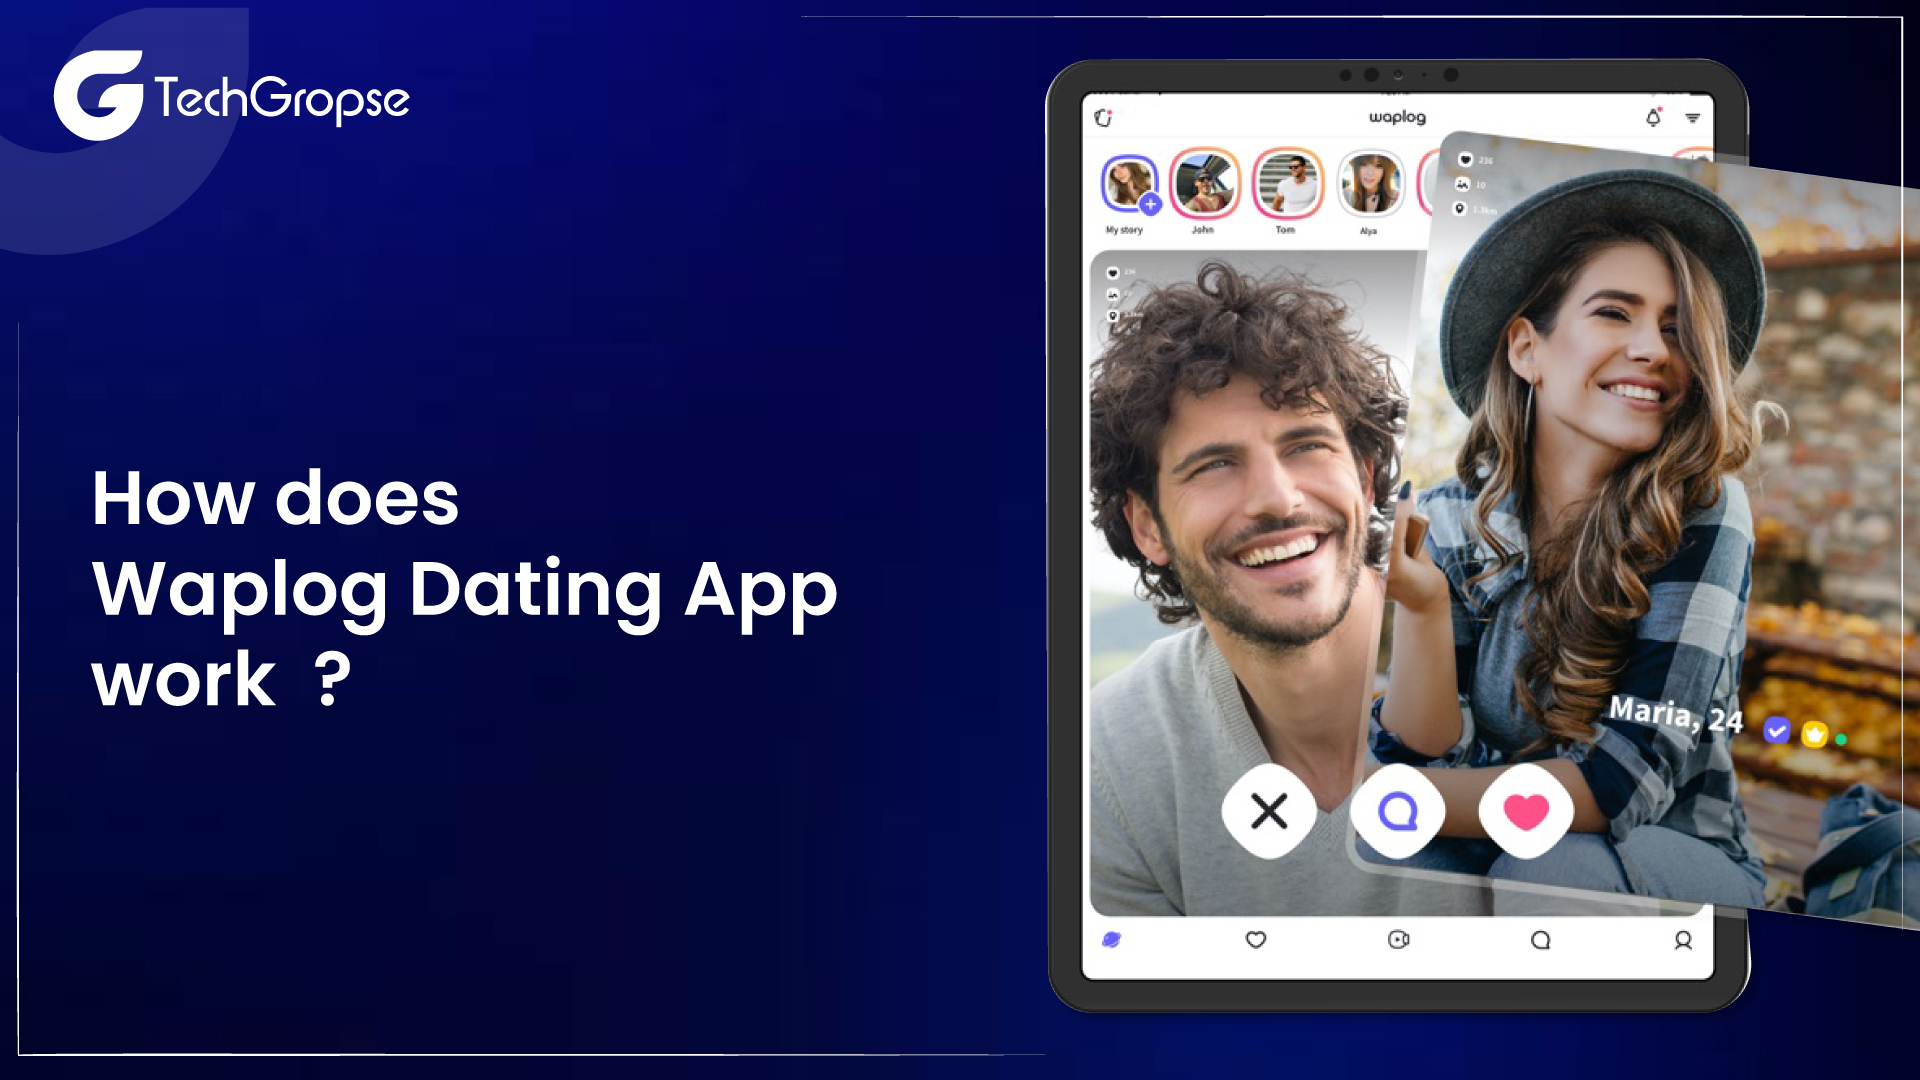 How does Waplog Dating App work?